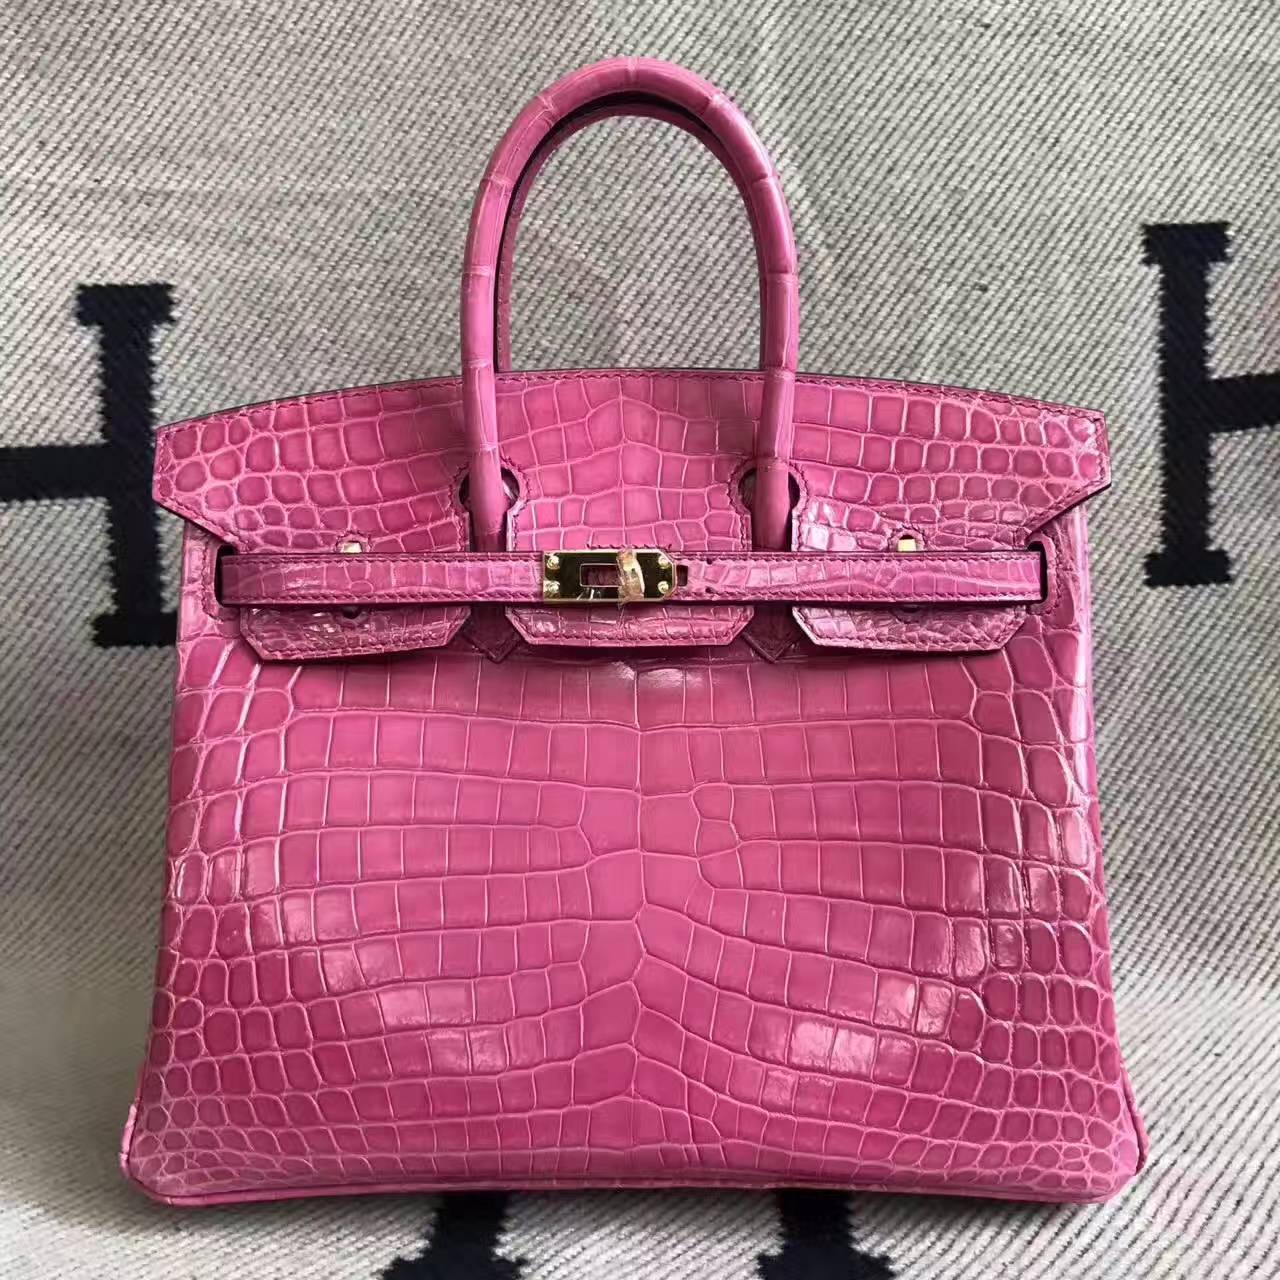 Luxury Hermes Shiny Crocodile Leather Birkin Bag 25cm in 5E Hot Pink ...